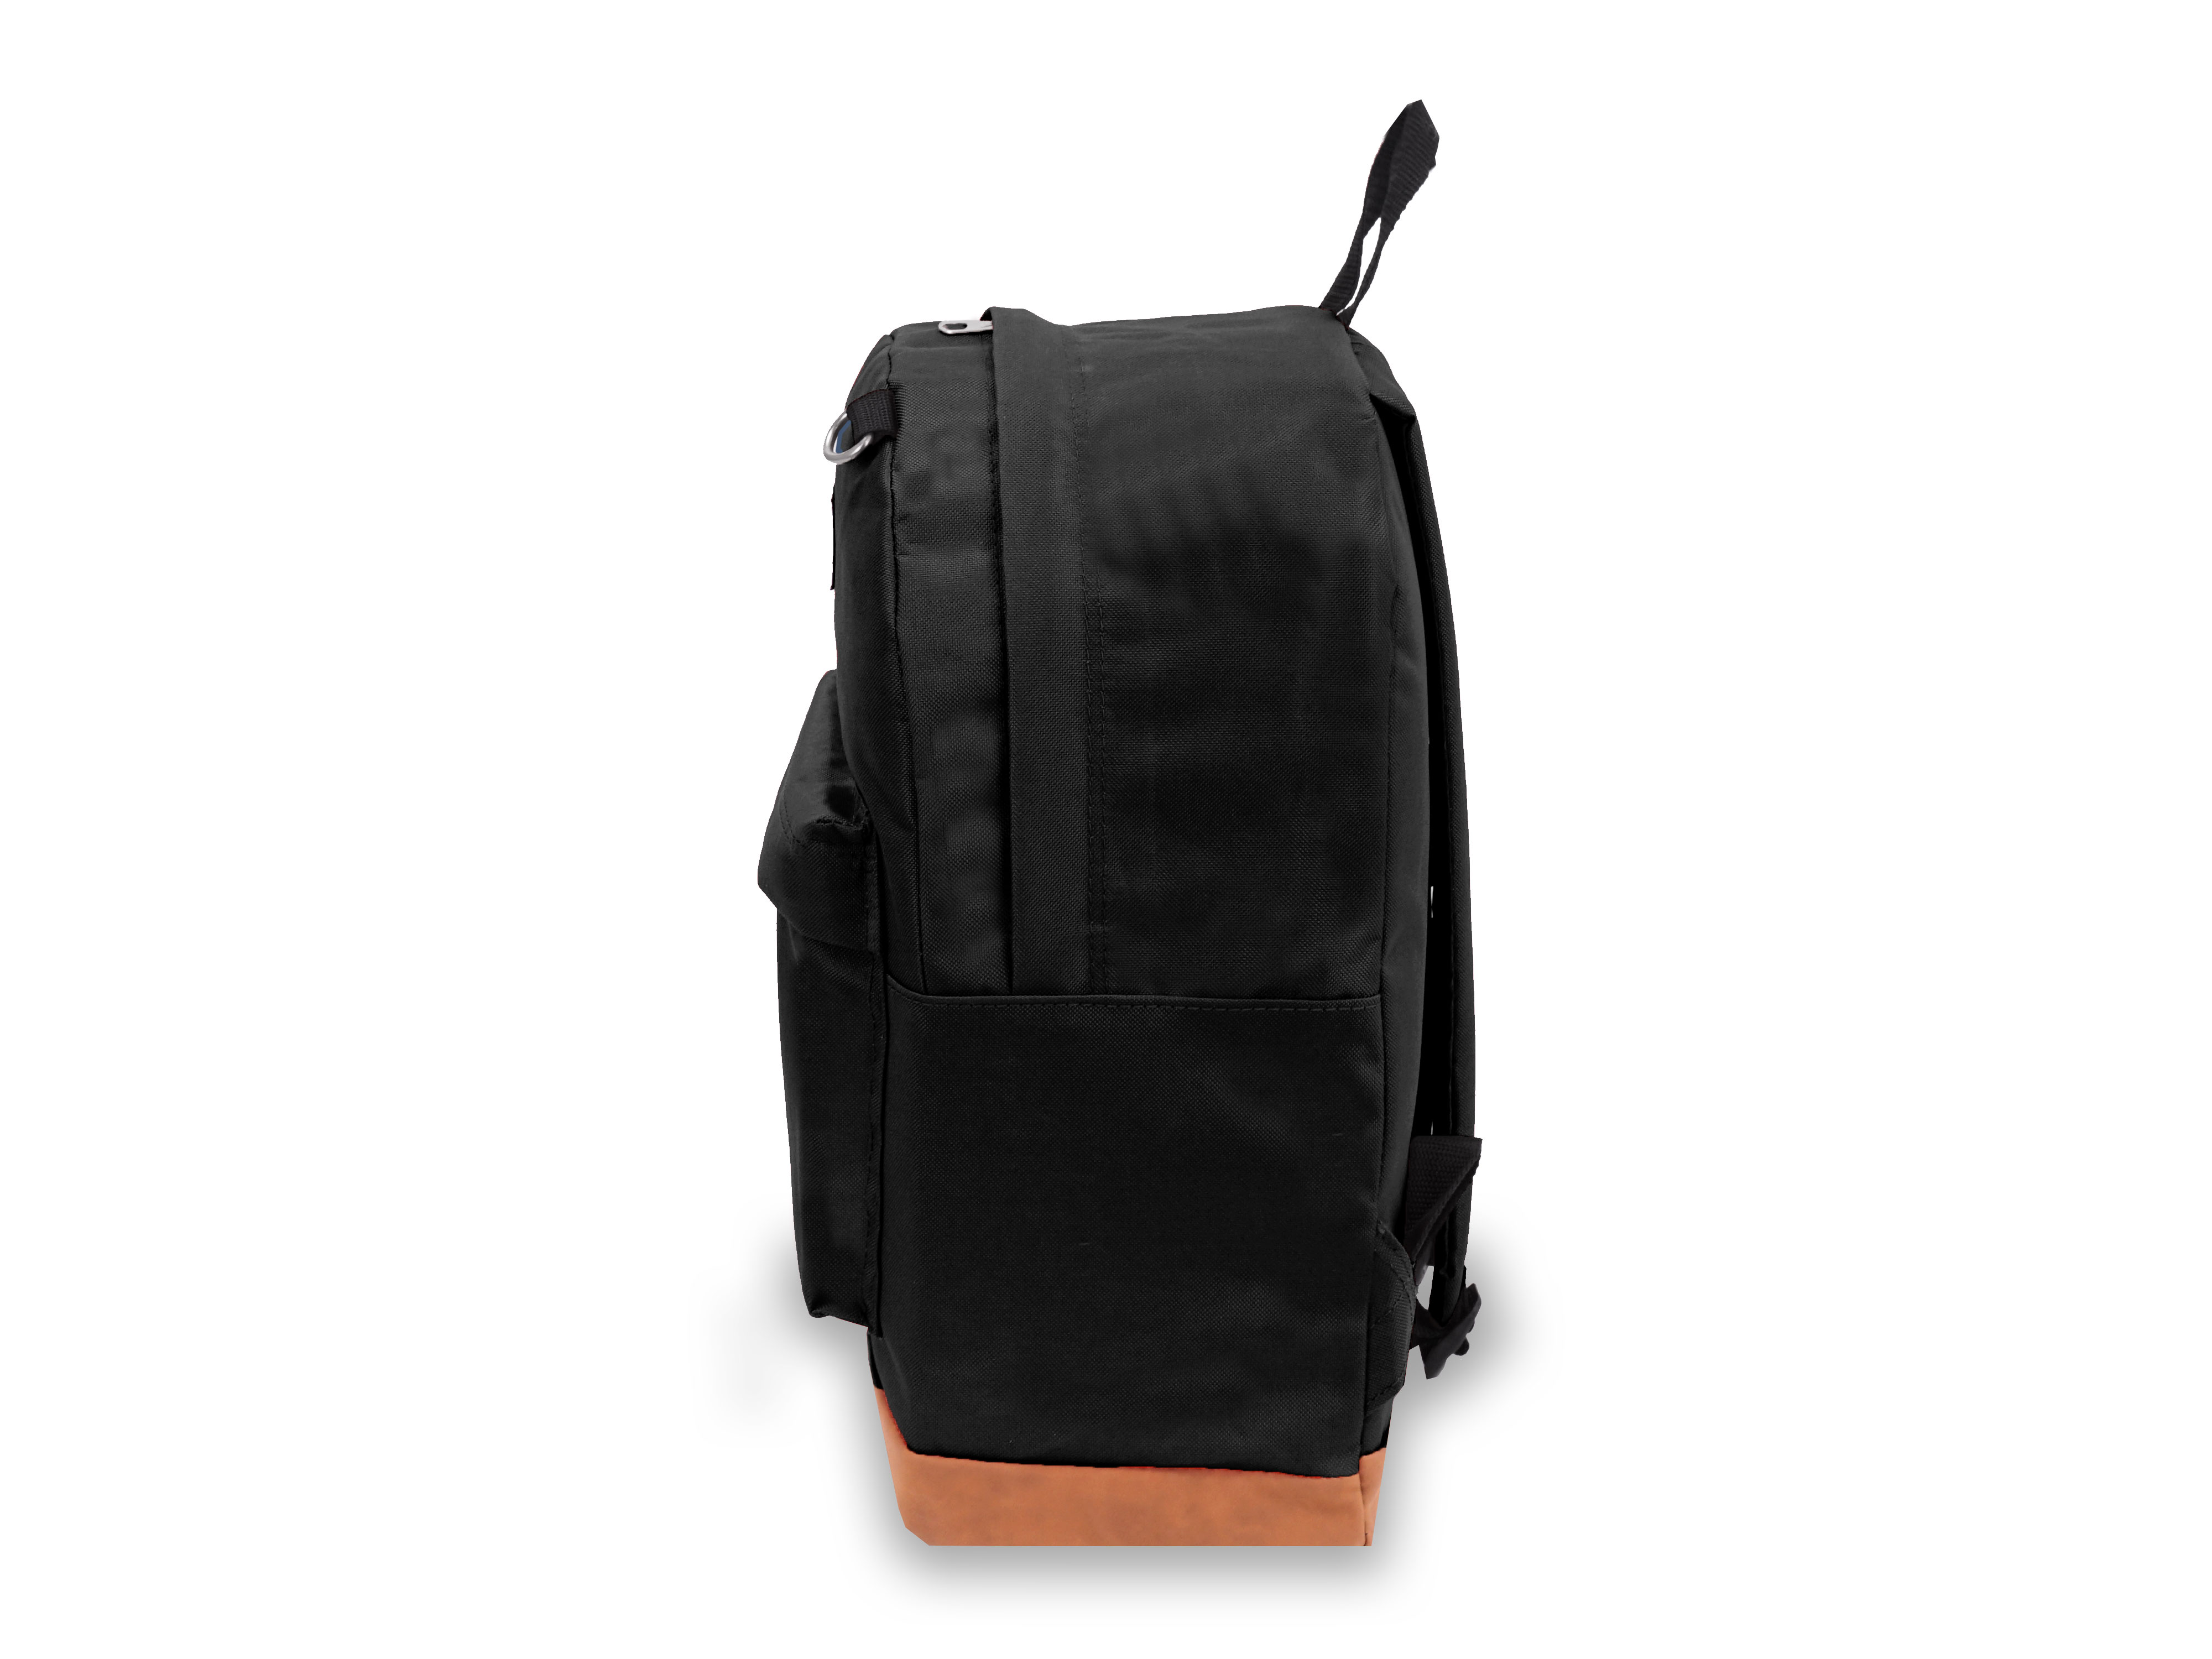 Everest 17" Suede Bottom Backpack, Black All Ages, Unisex 1045GL-BK, Carrier and Shoulder Book Bag for School, Work, Sports, and Travel - image 4 of 4